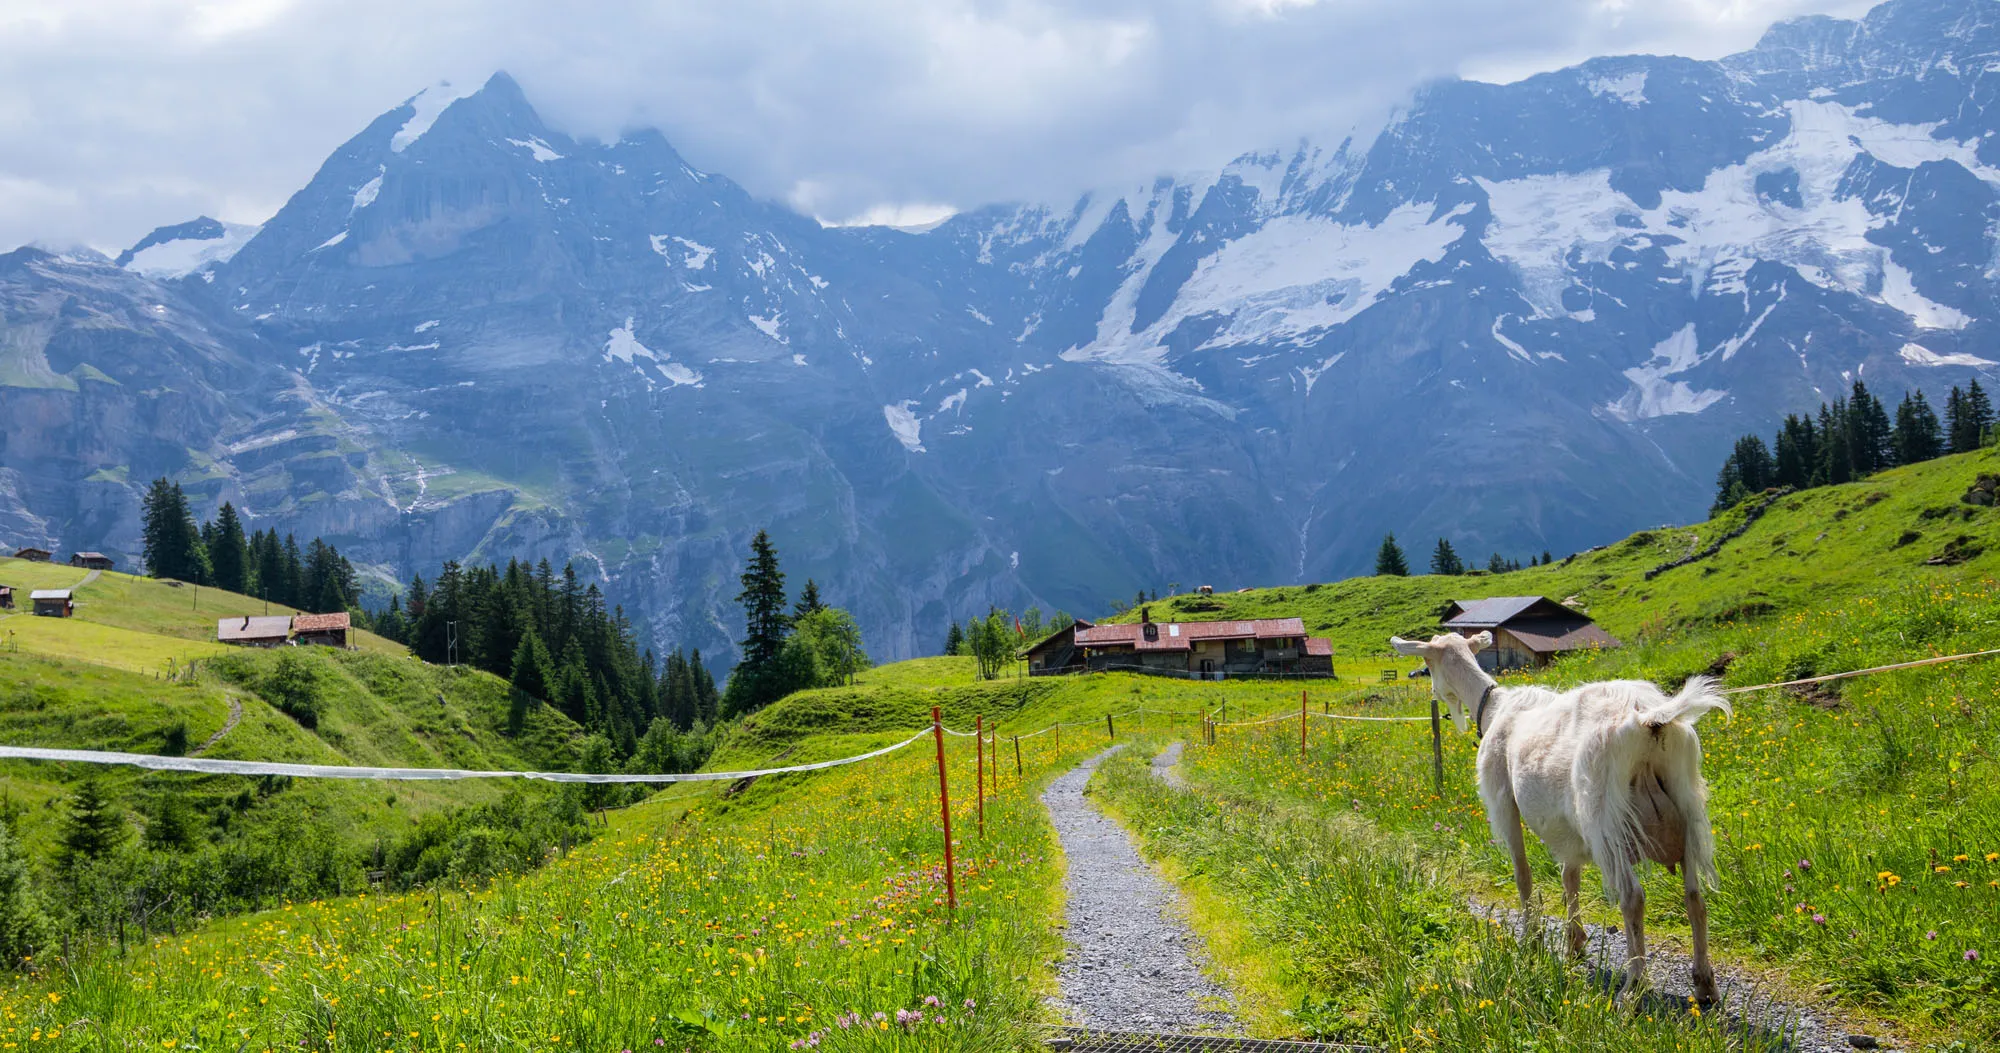 Featured image for “Walking the Northface Trail in Mürren, Switzerland”